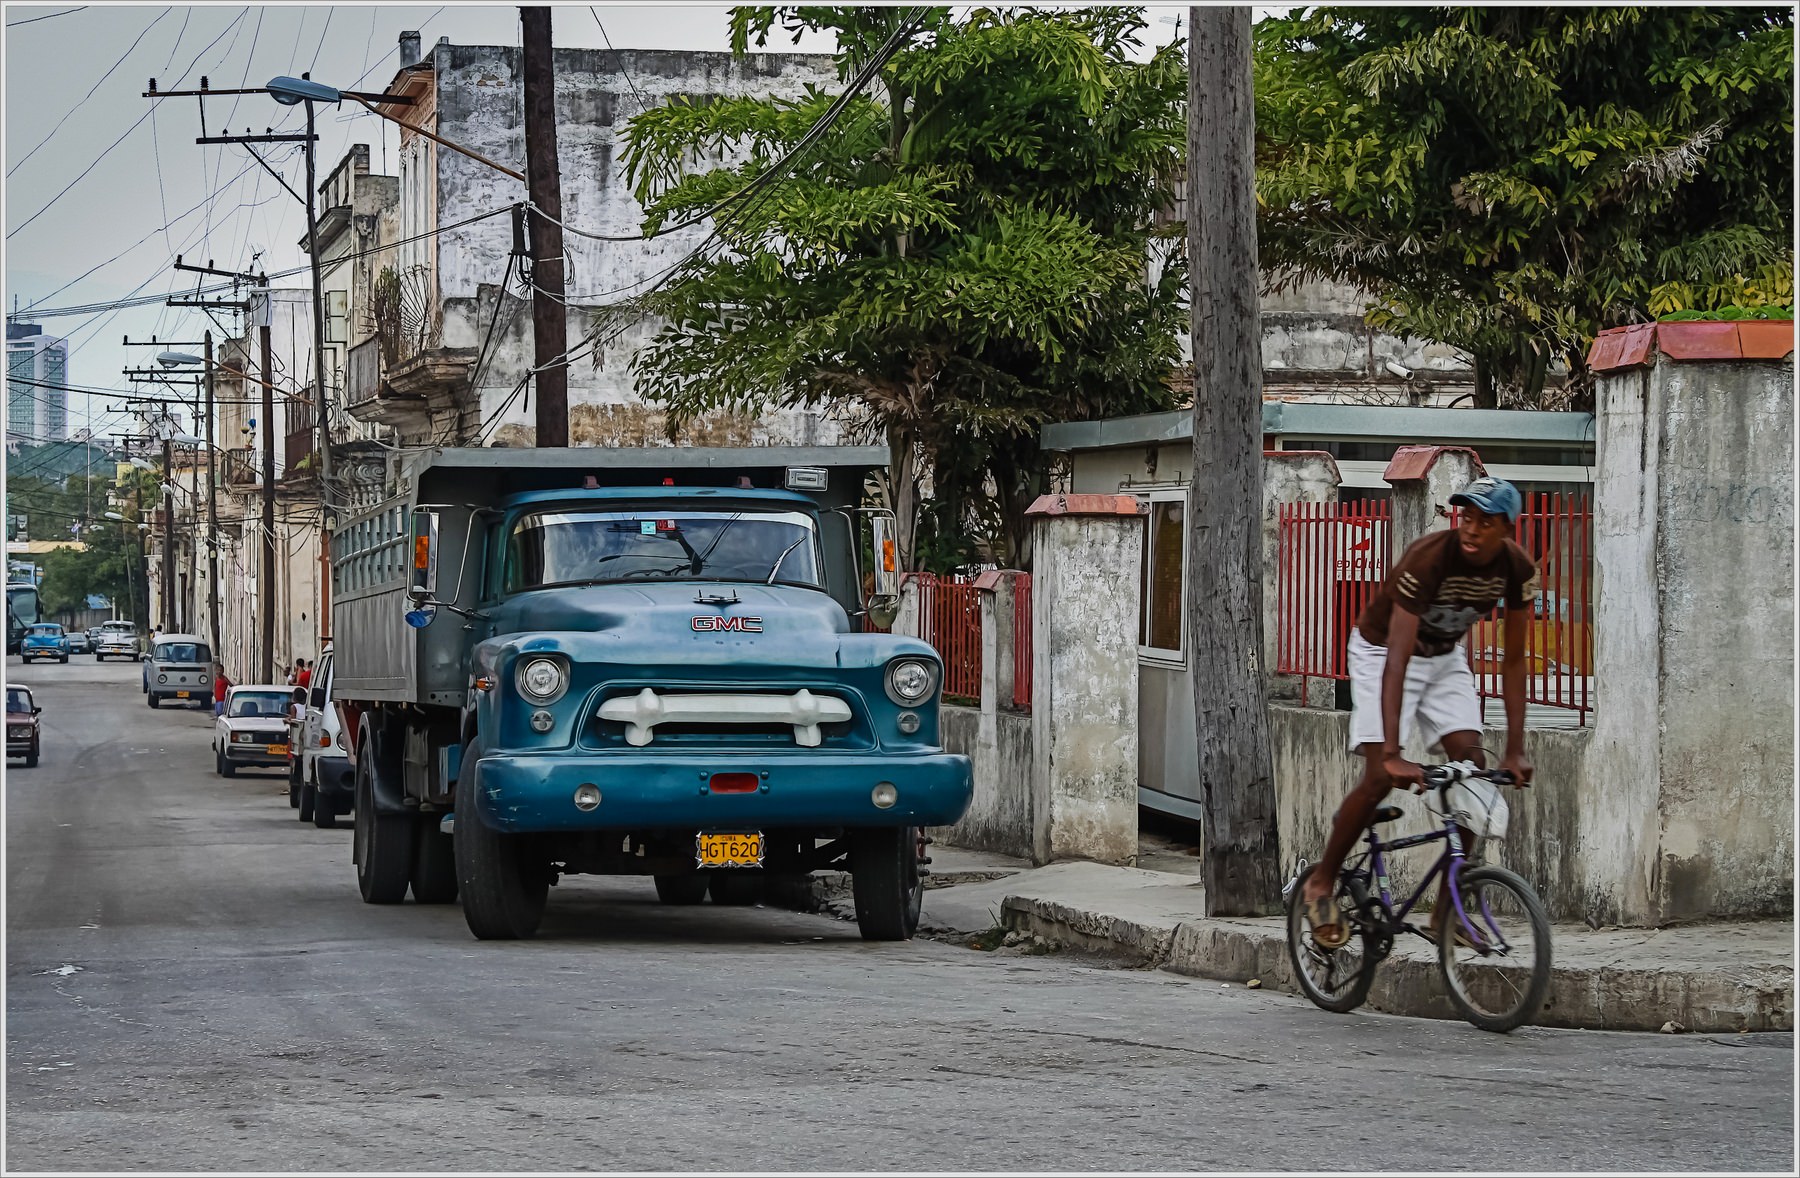 Улочки Гаваны